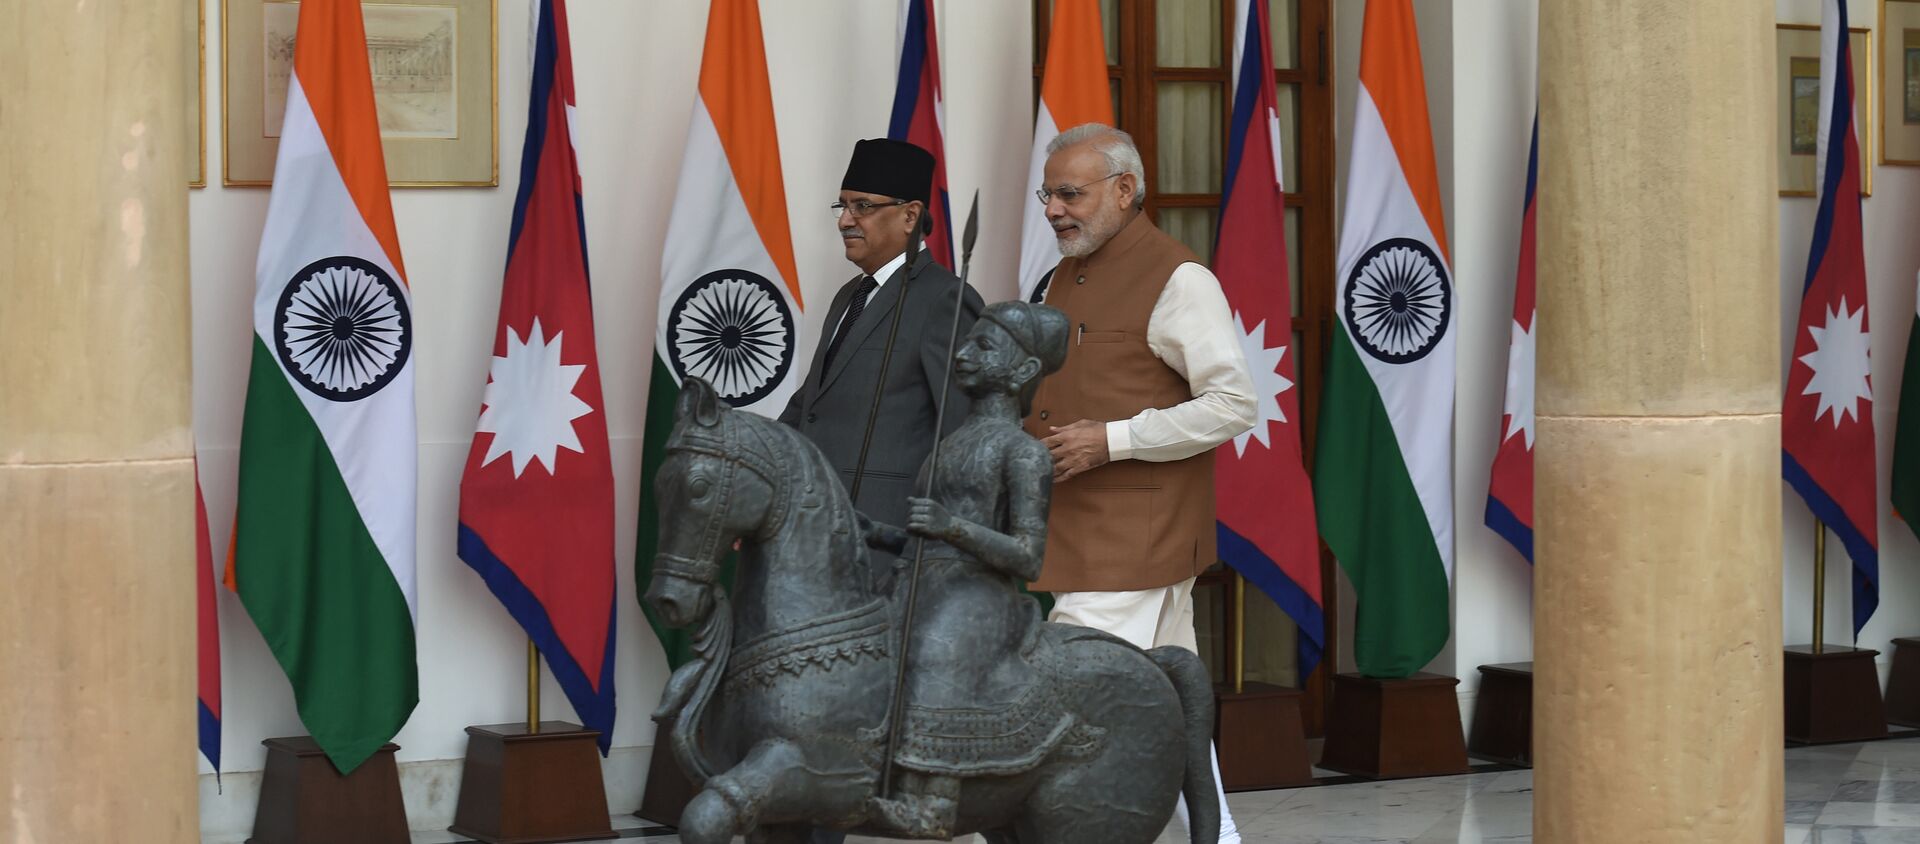 Indian Prime Minister Narendra Modi (R) walks with Nepalese Prime Minister Pushpa Kamal Dahal prior to a meeting in New Delhi on September 16, 2016 - Sputnik International, 1920, 04.01.2021